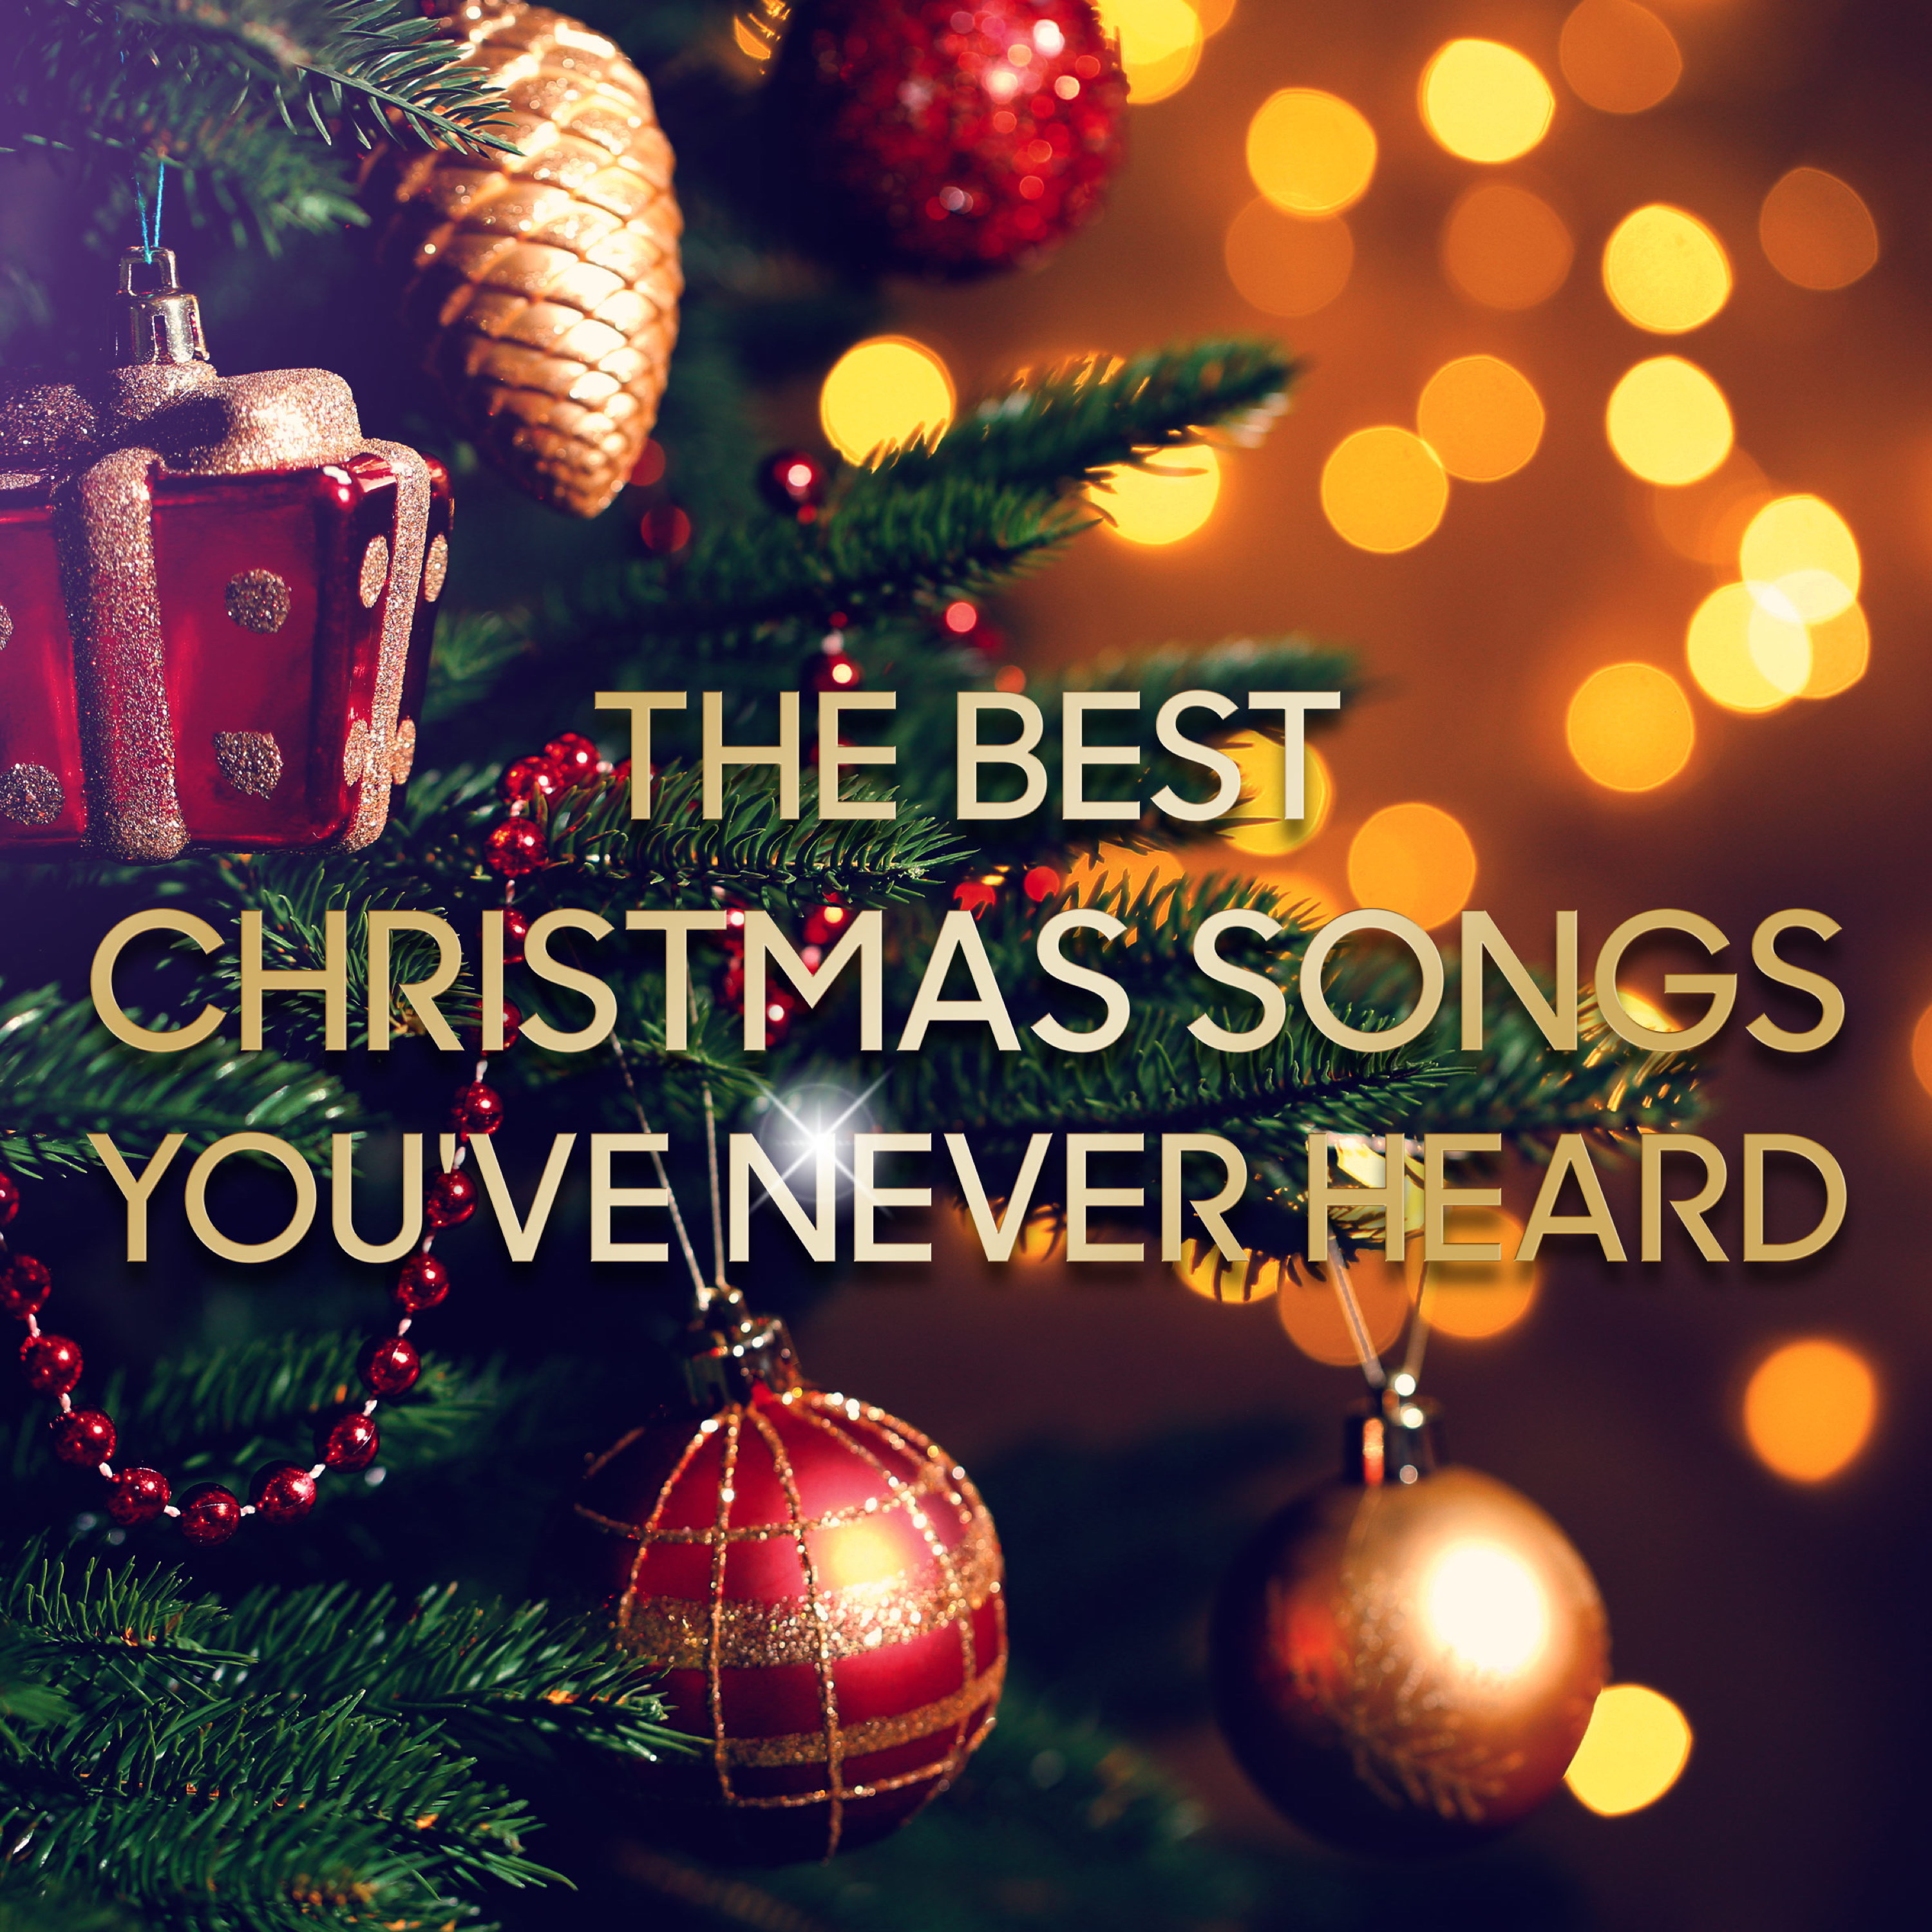 The Best Christmas Songs You've Never Heard